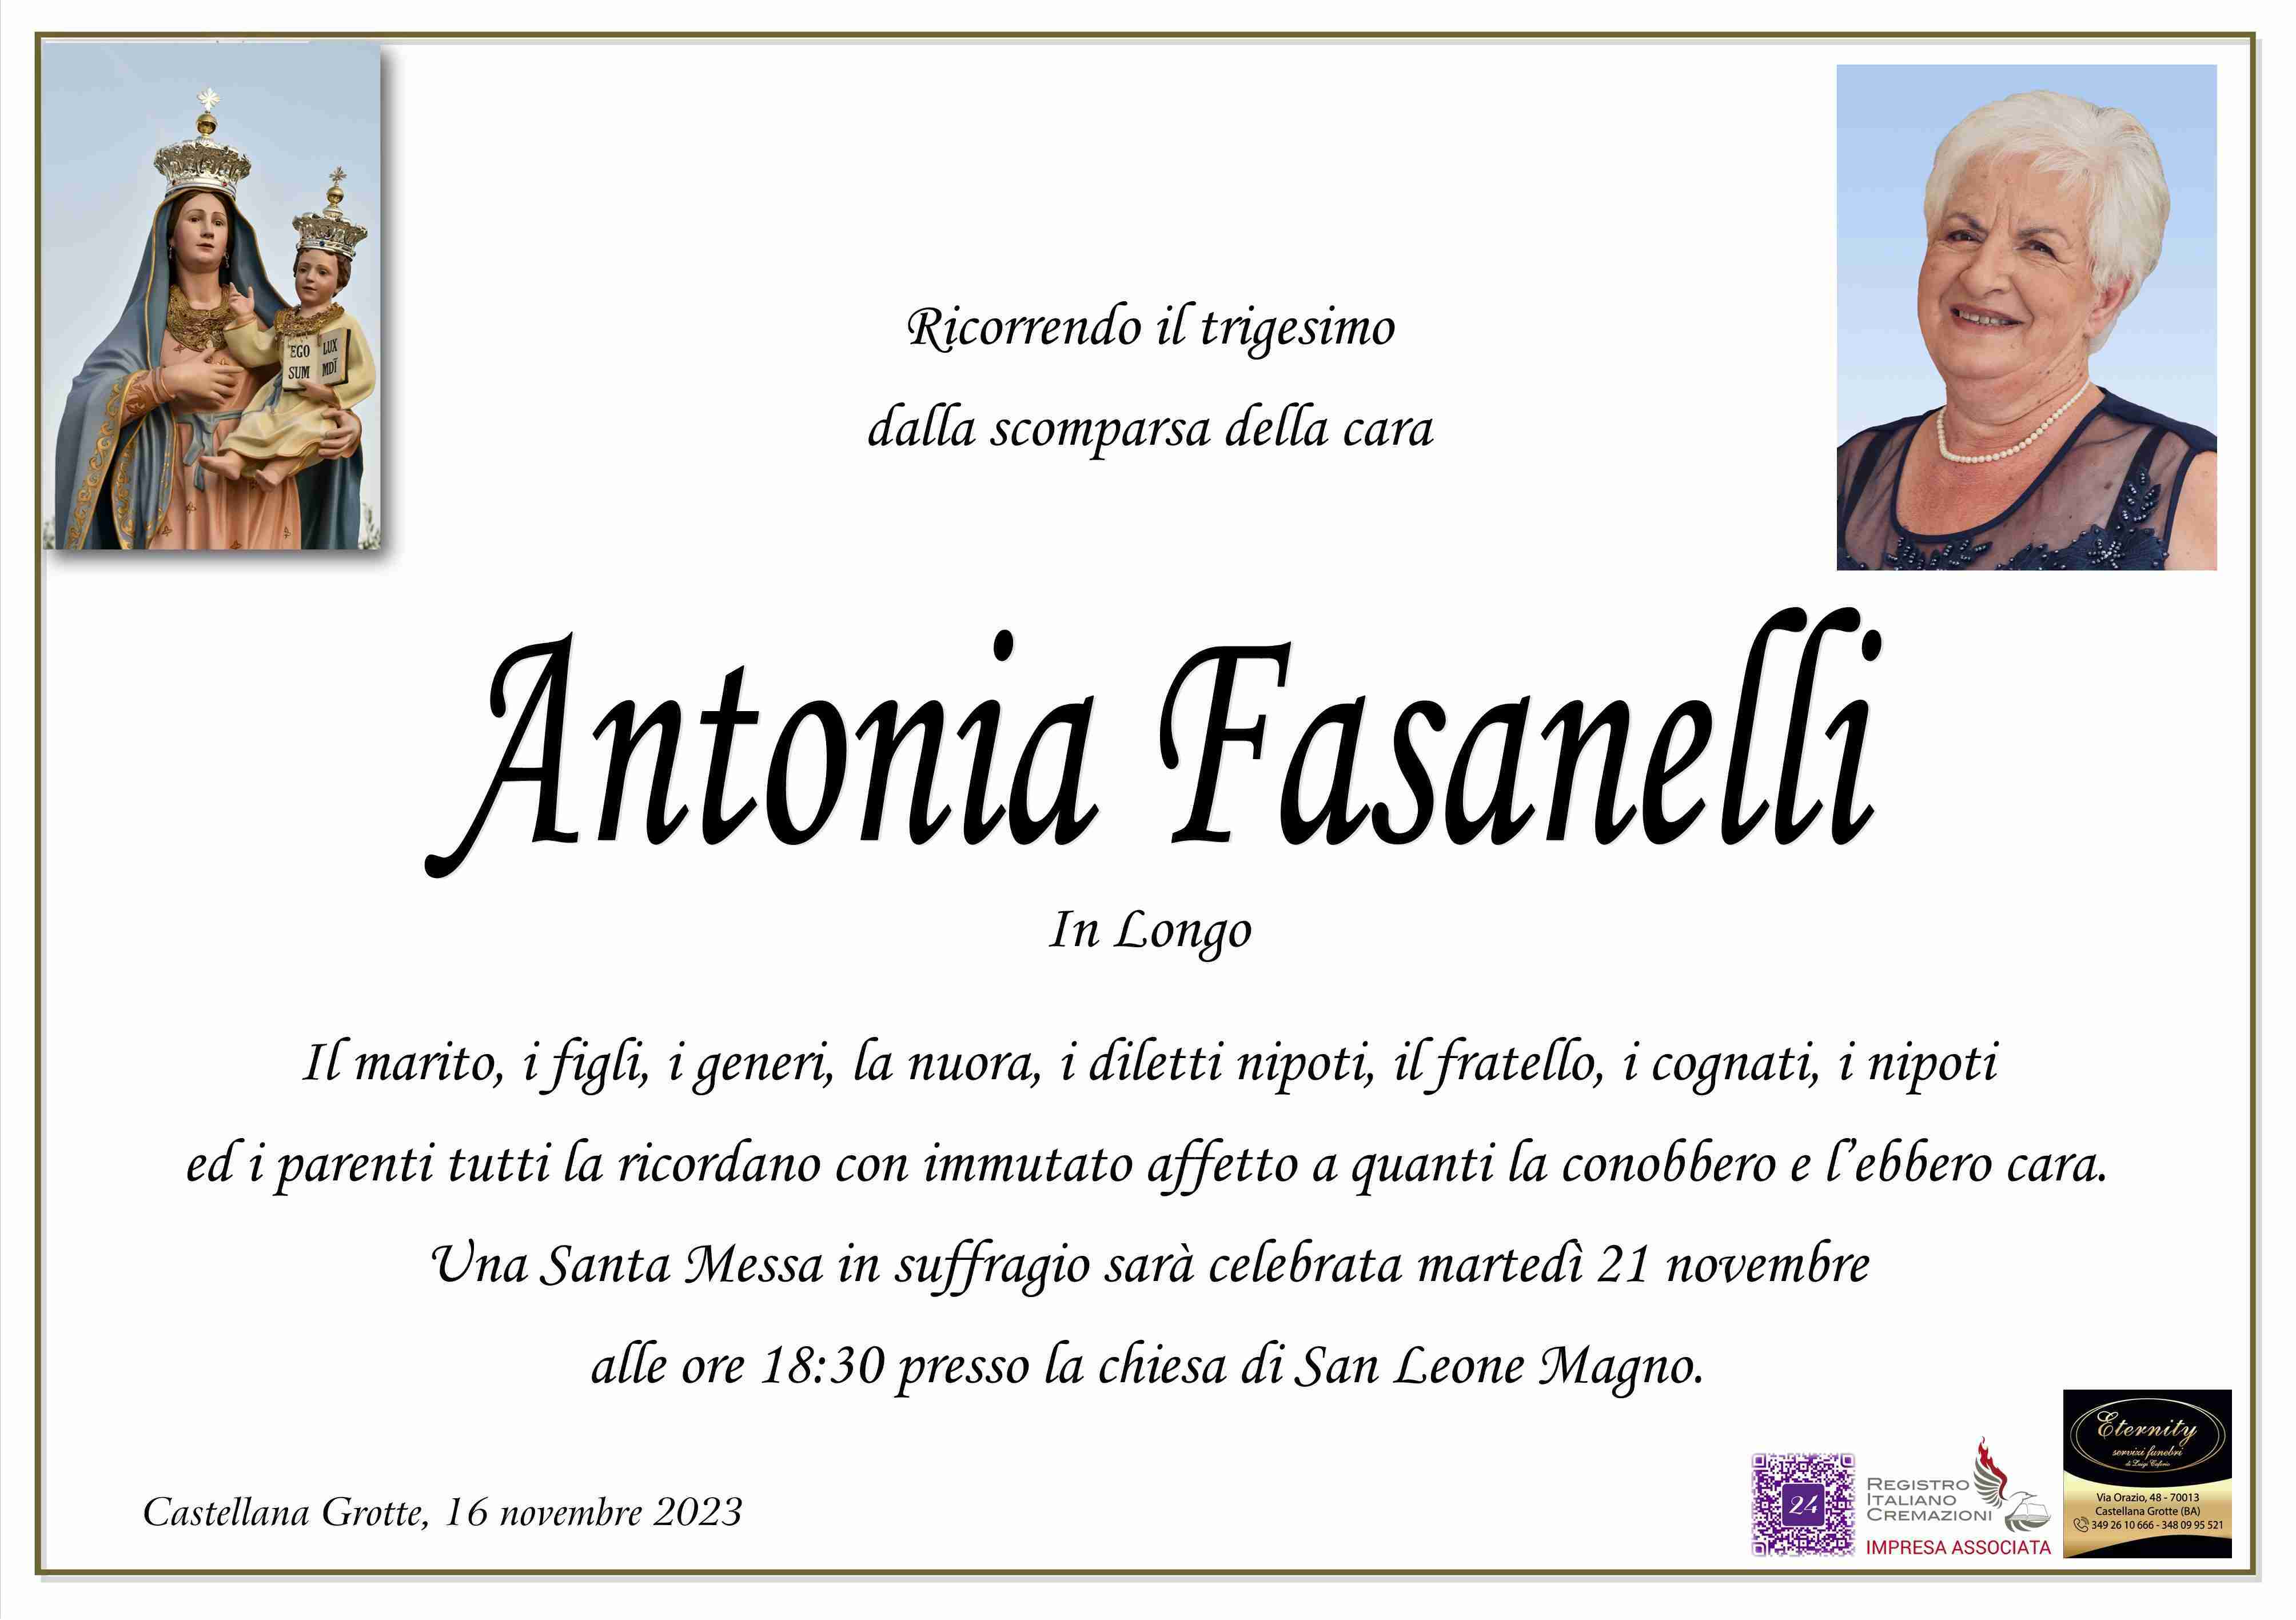 Antonia Fasanelli